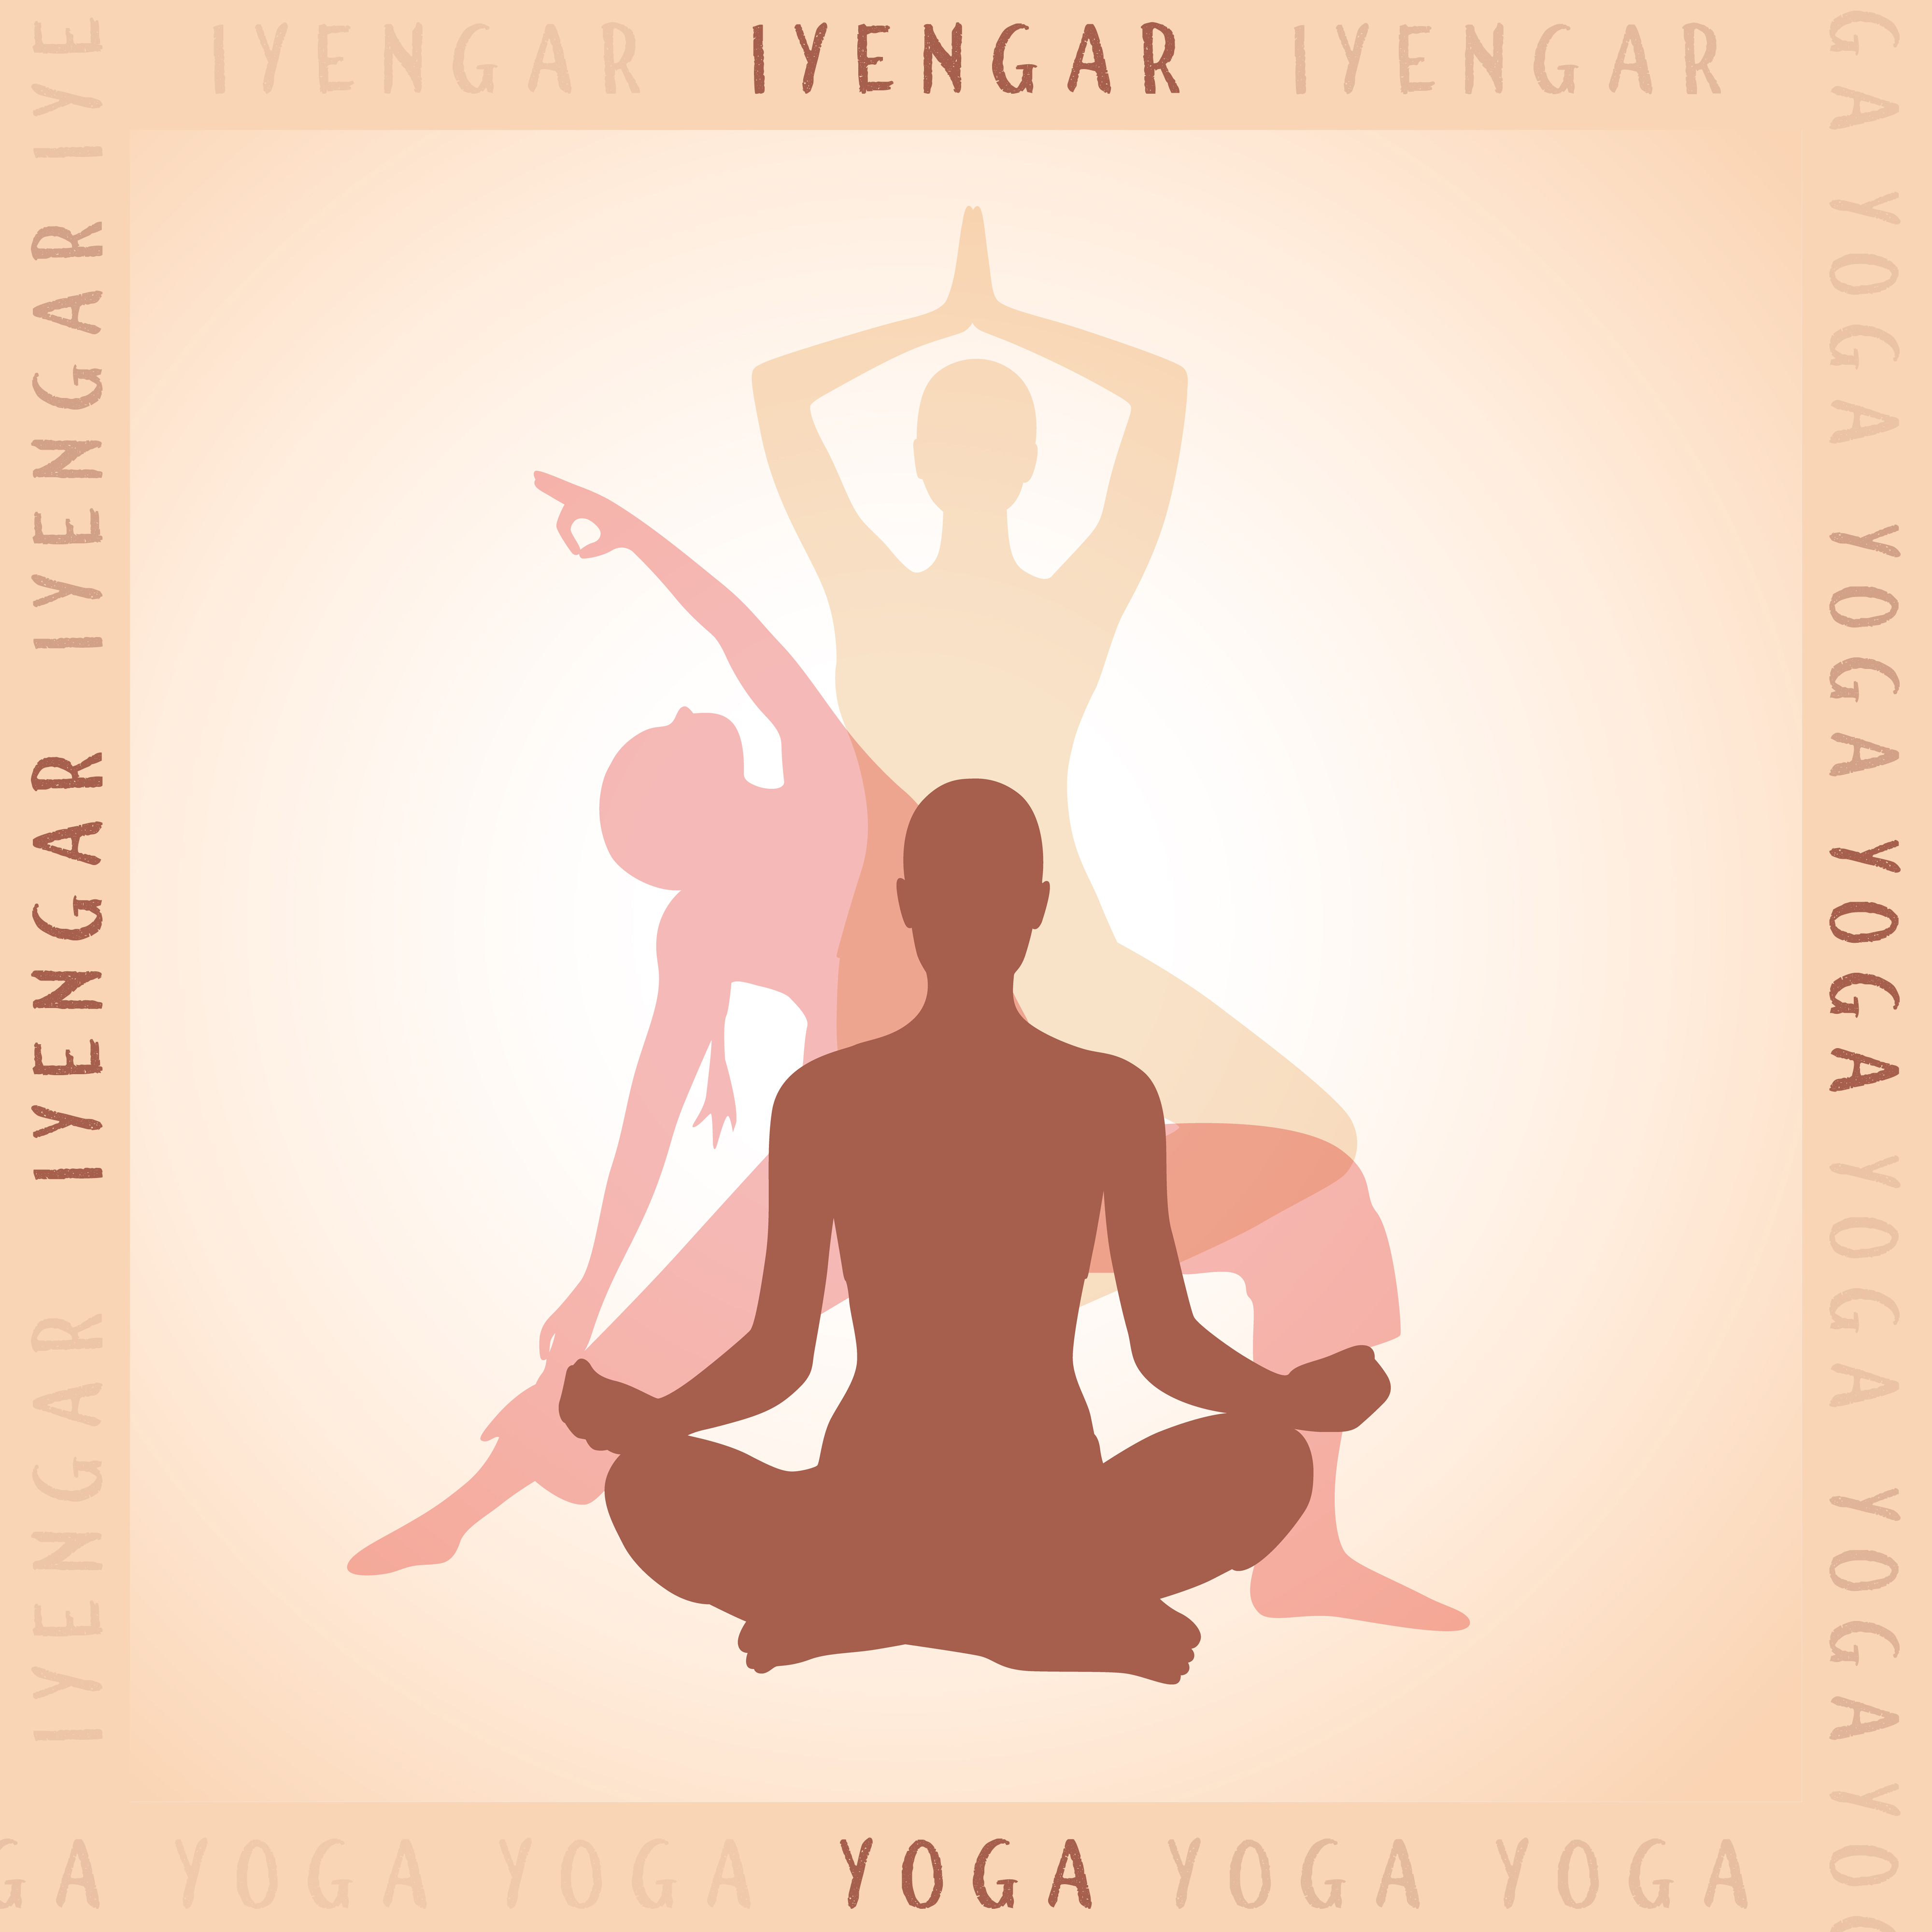 Iyengar Yoga: Music for Yoga, Yoga Pose, Practice and Training